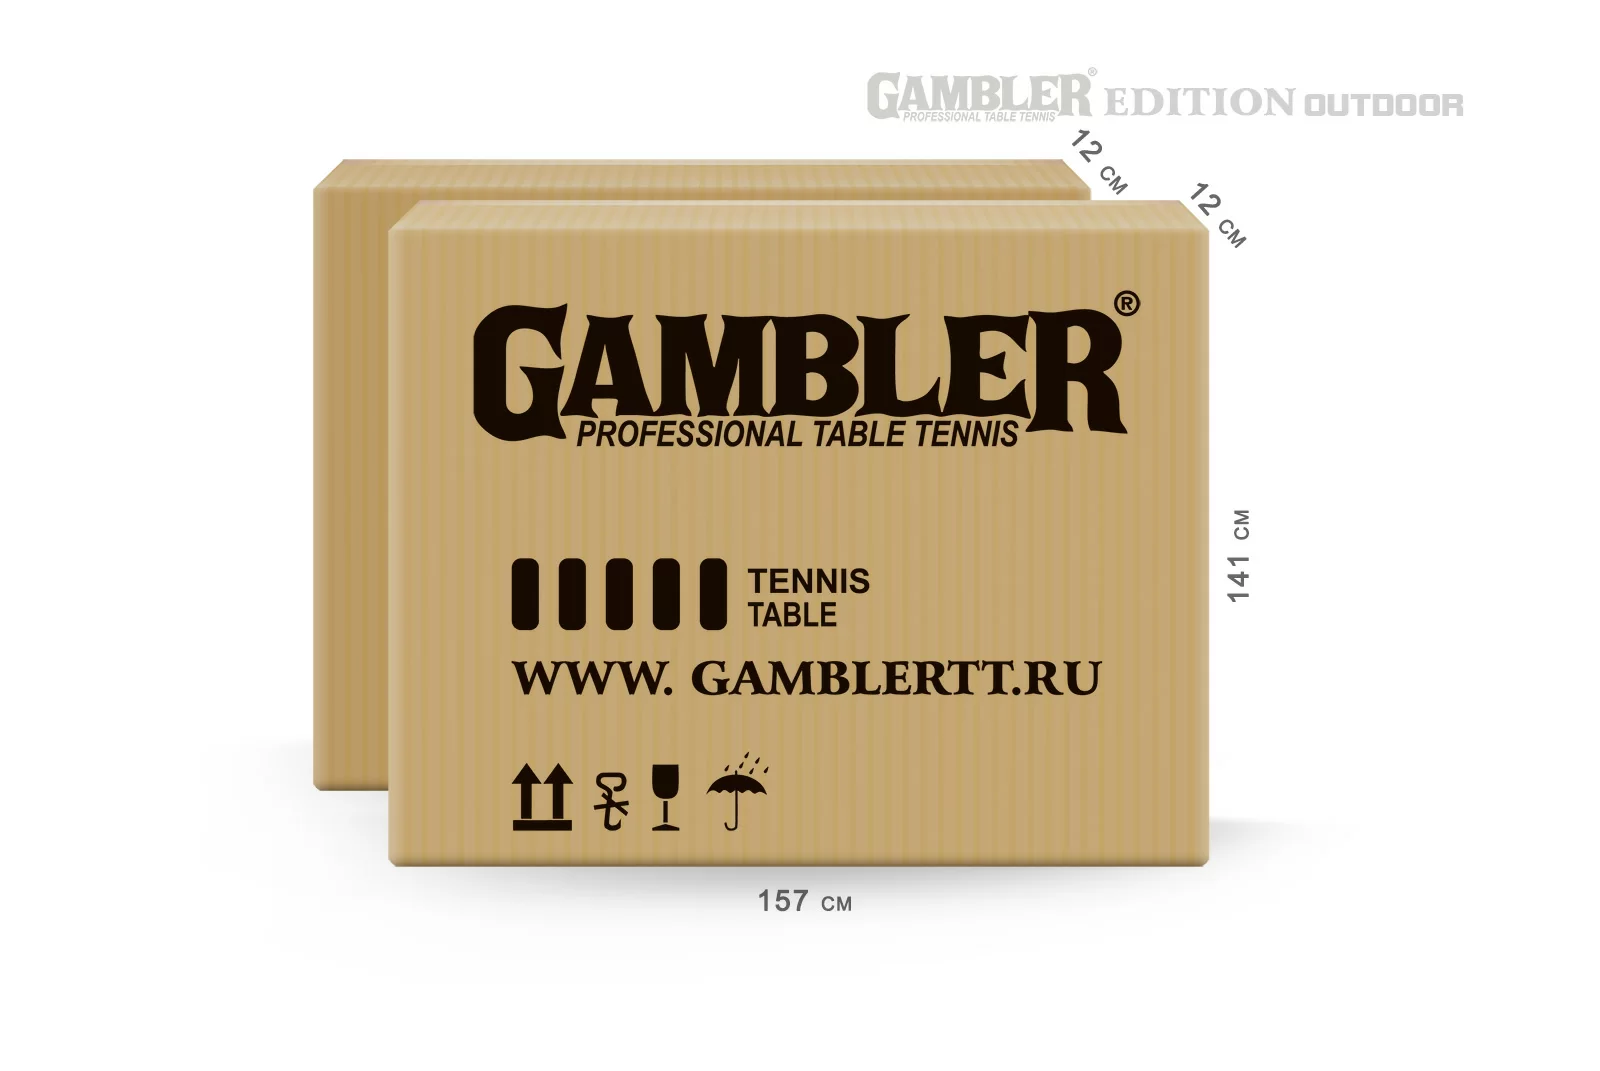 Фото GAMBLER Edition Outdoor GREEN со склада магазина СпортЕВ